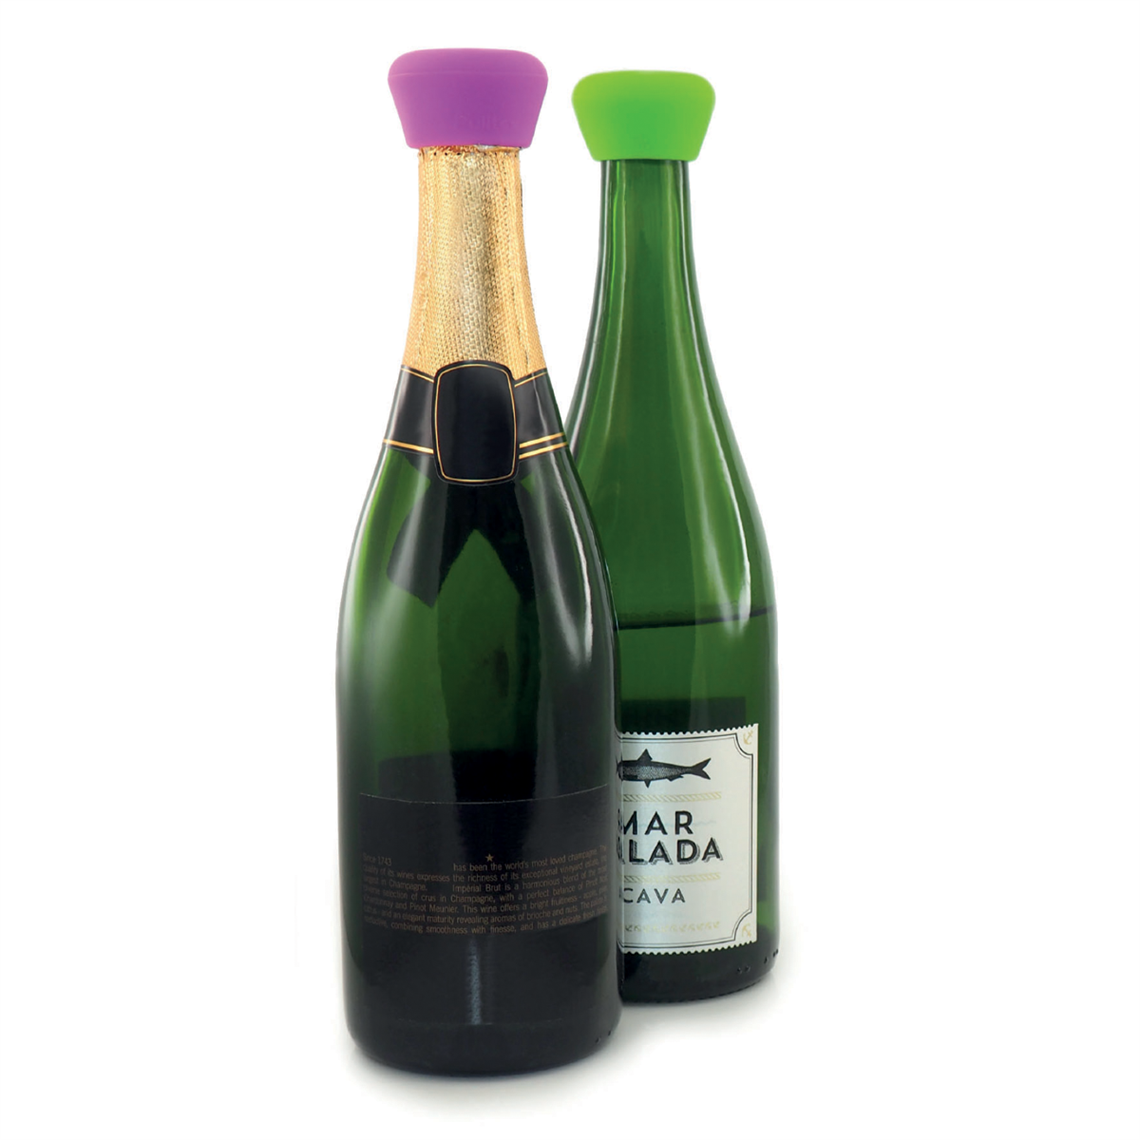 Pulltex Silicone Champagne & Sparkling Wine Bottle Stopper - Black - Set of 2